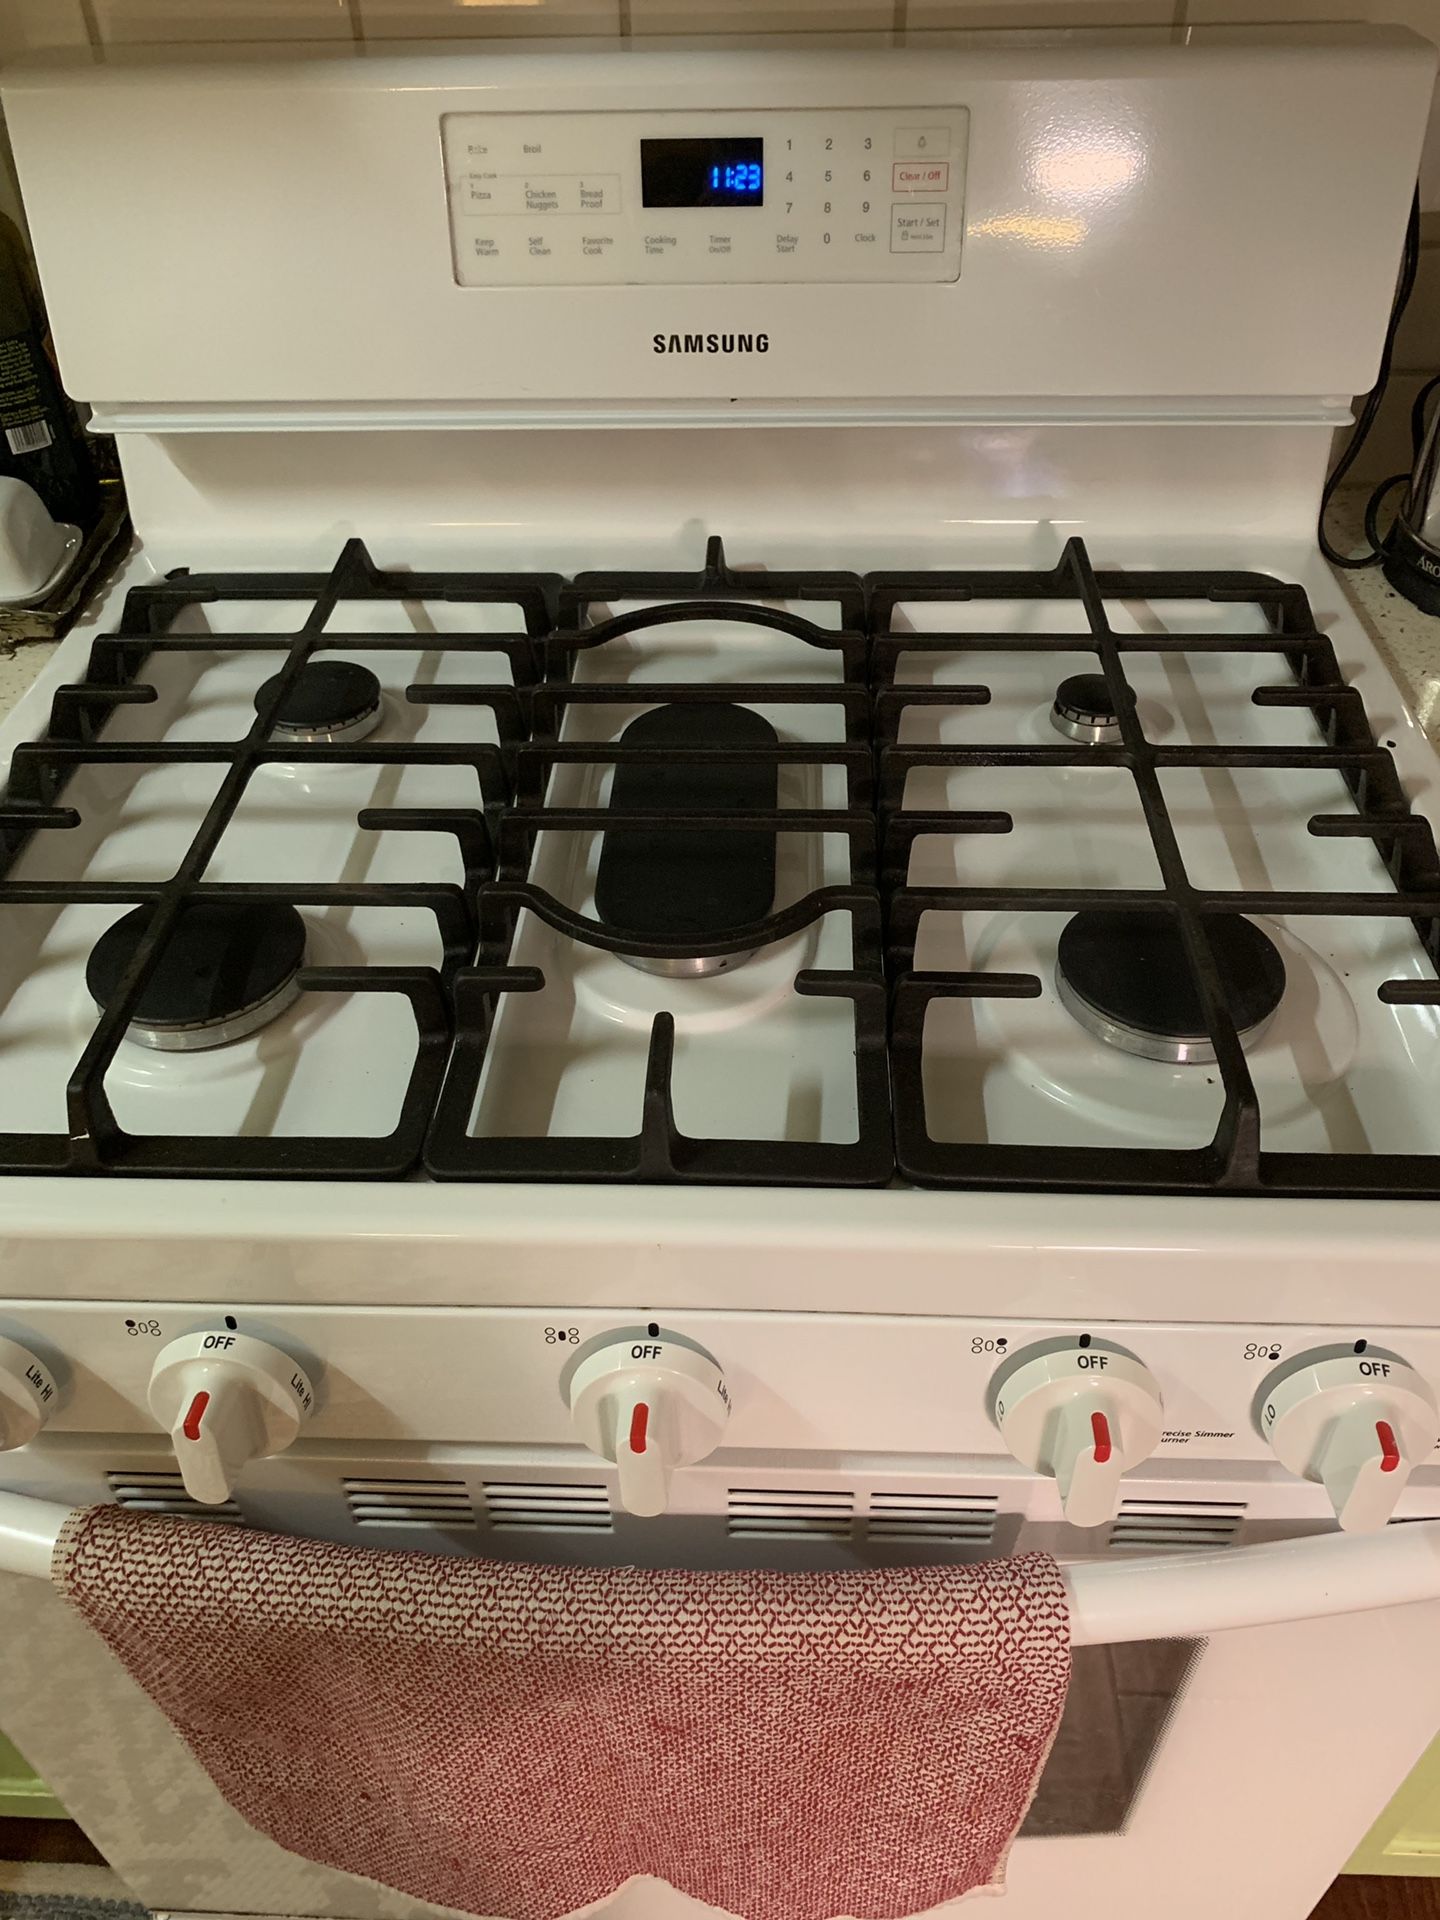 Samsung gas stove and oven